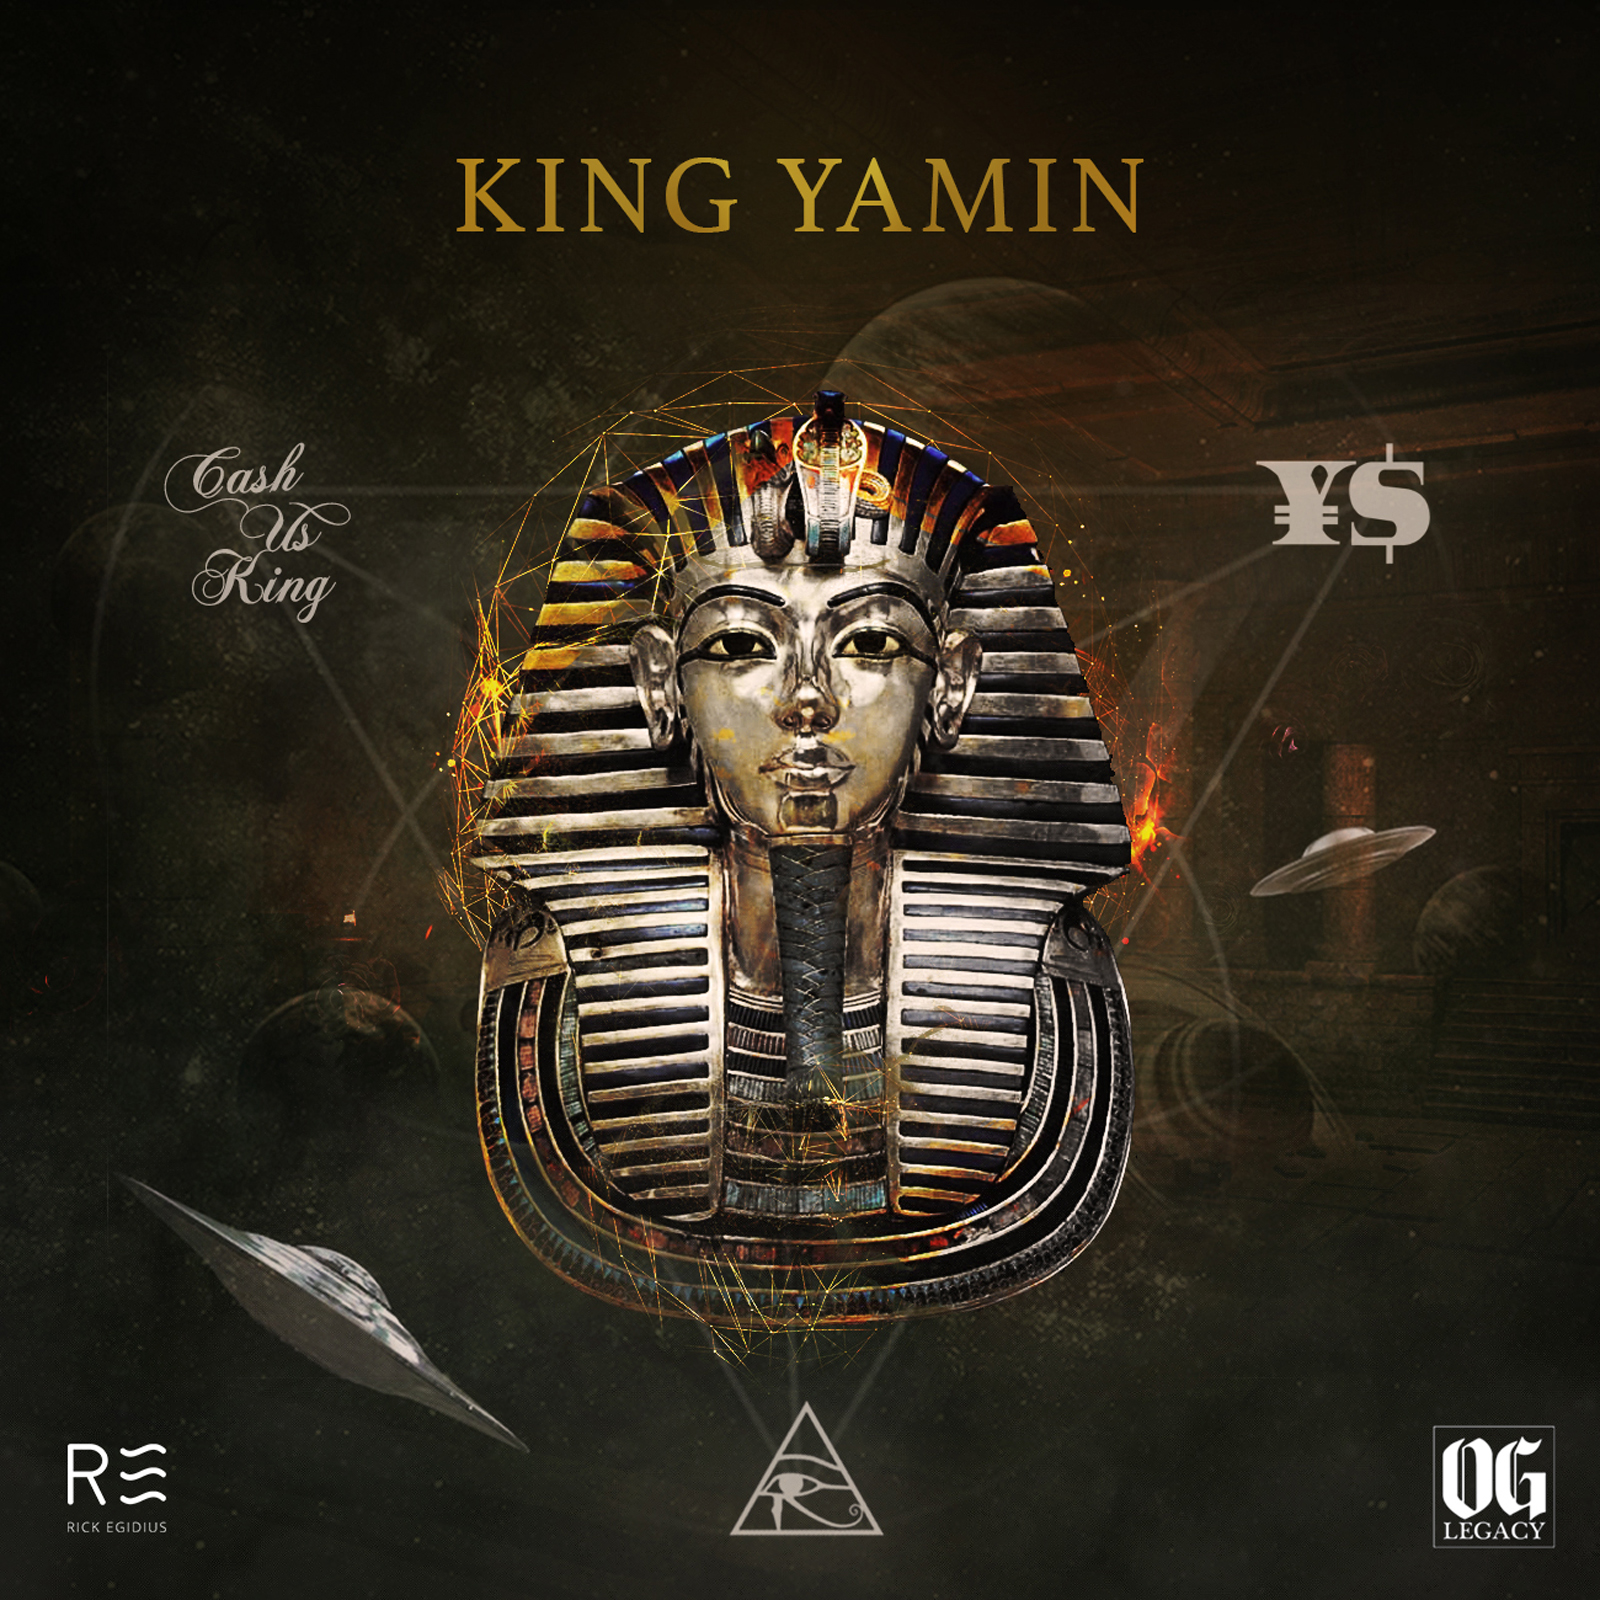 Cashus King Links With Yamin Semali For “KING YAMIN”